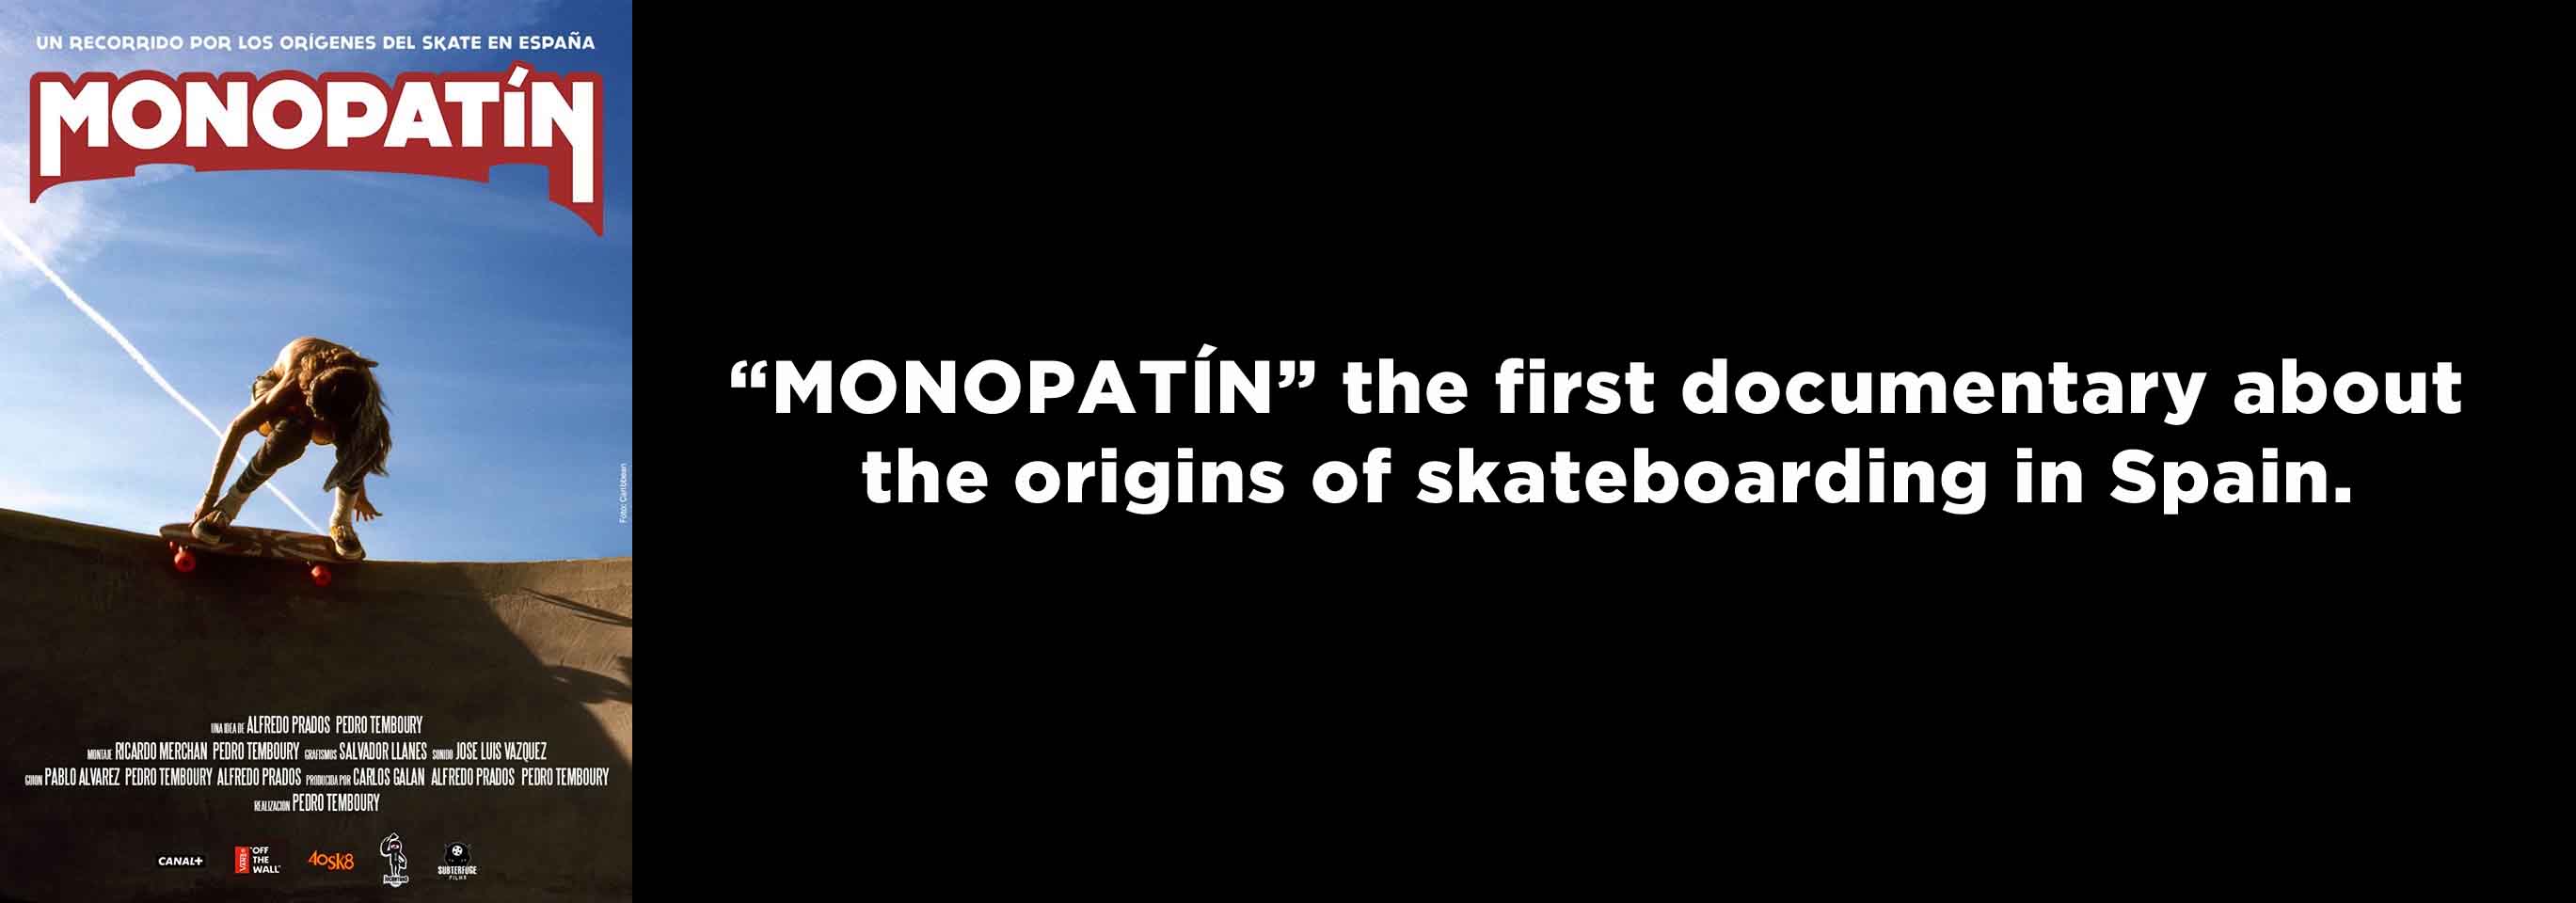 monopatin_skate documental